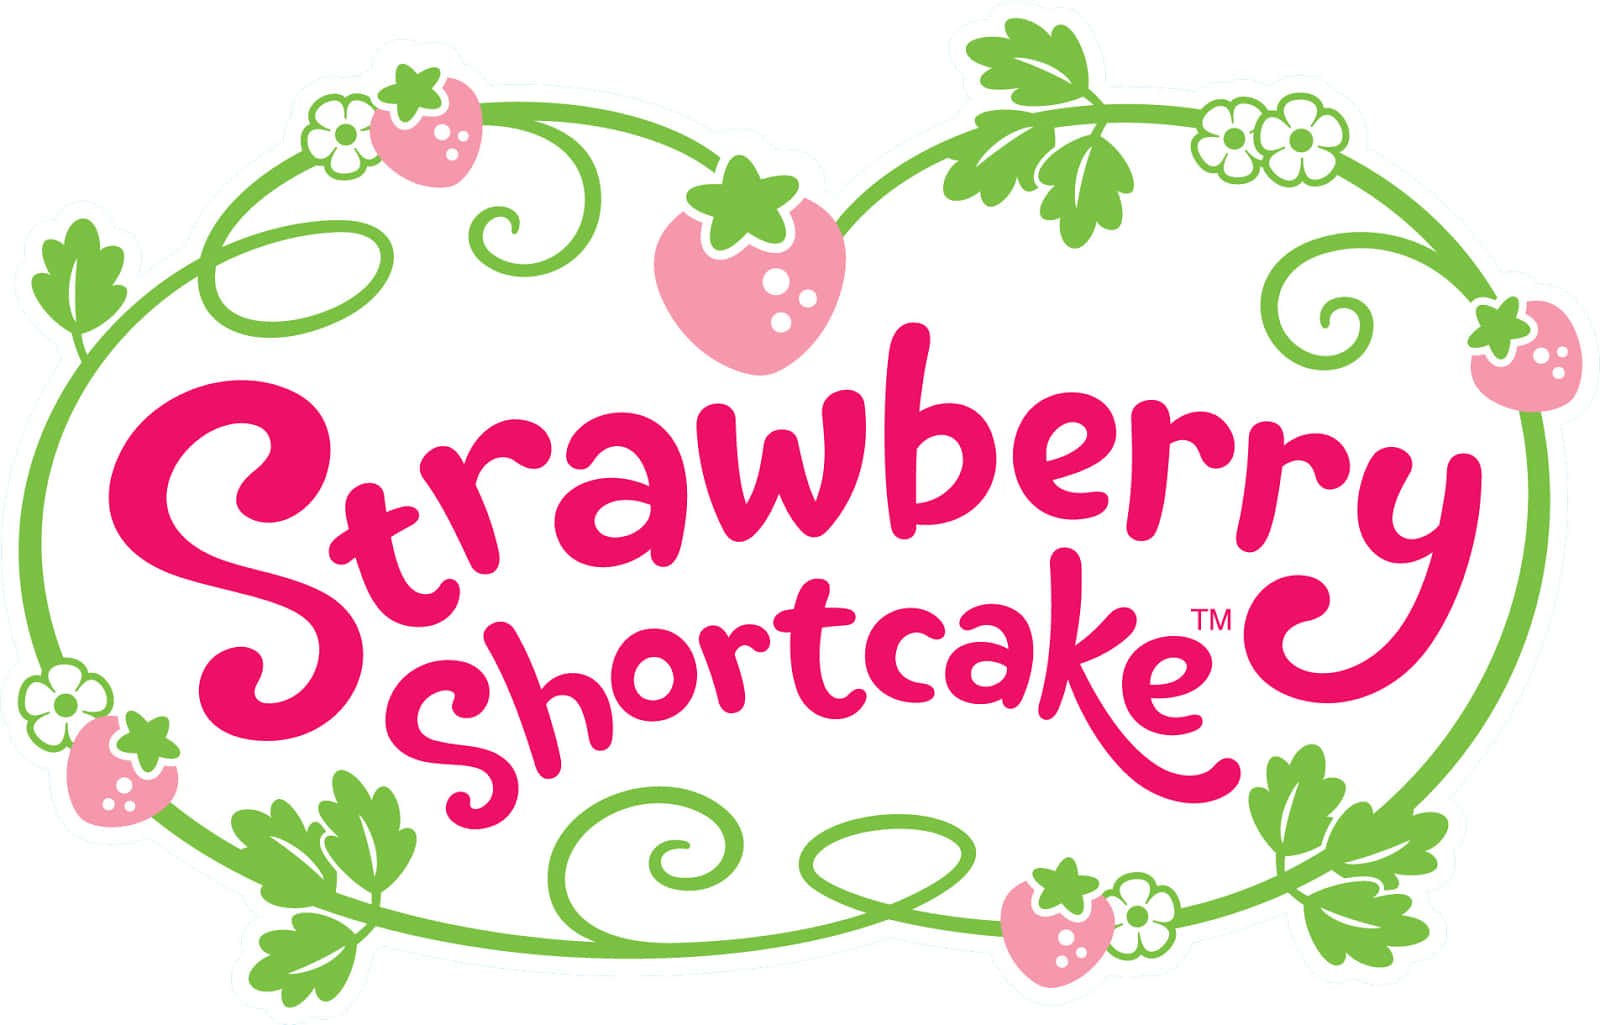 Green And Pink Strawberry Shortcake Logo Wallpaper